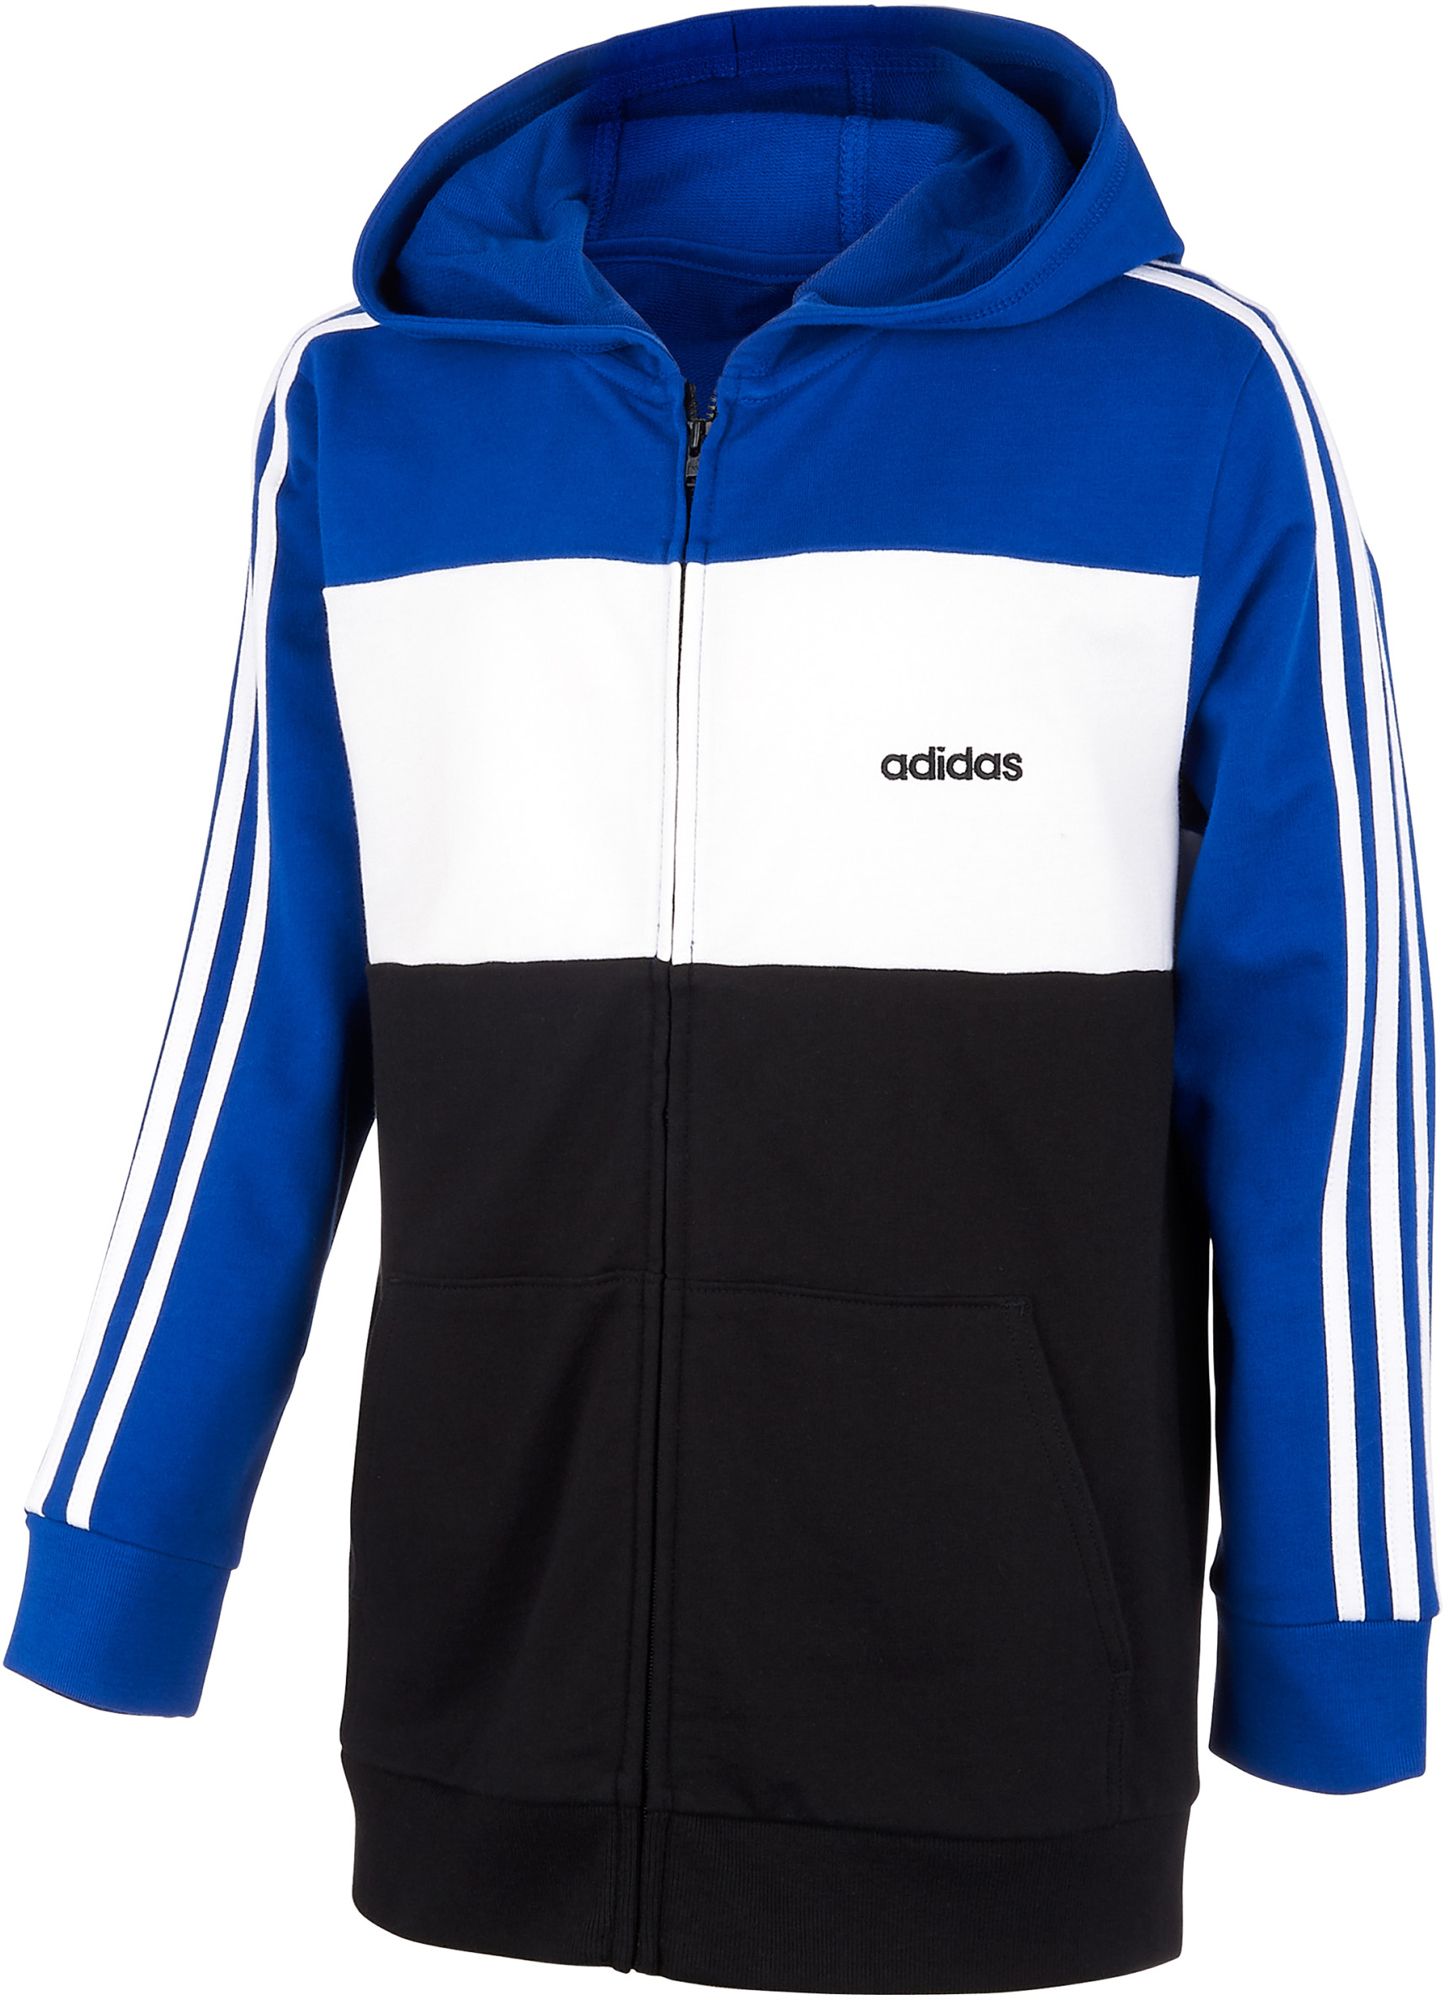 boys blue adidas hoodie